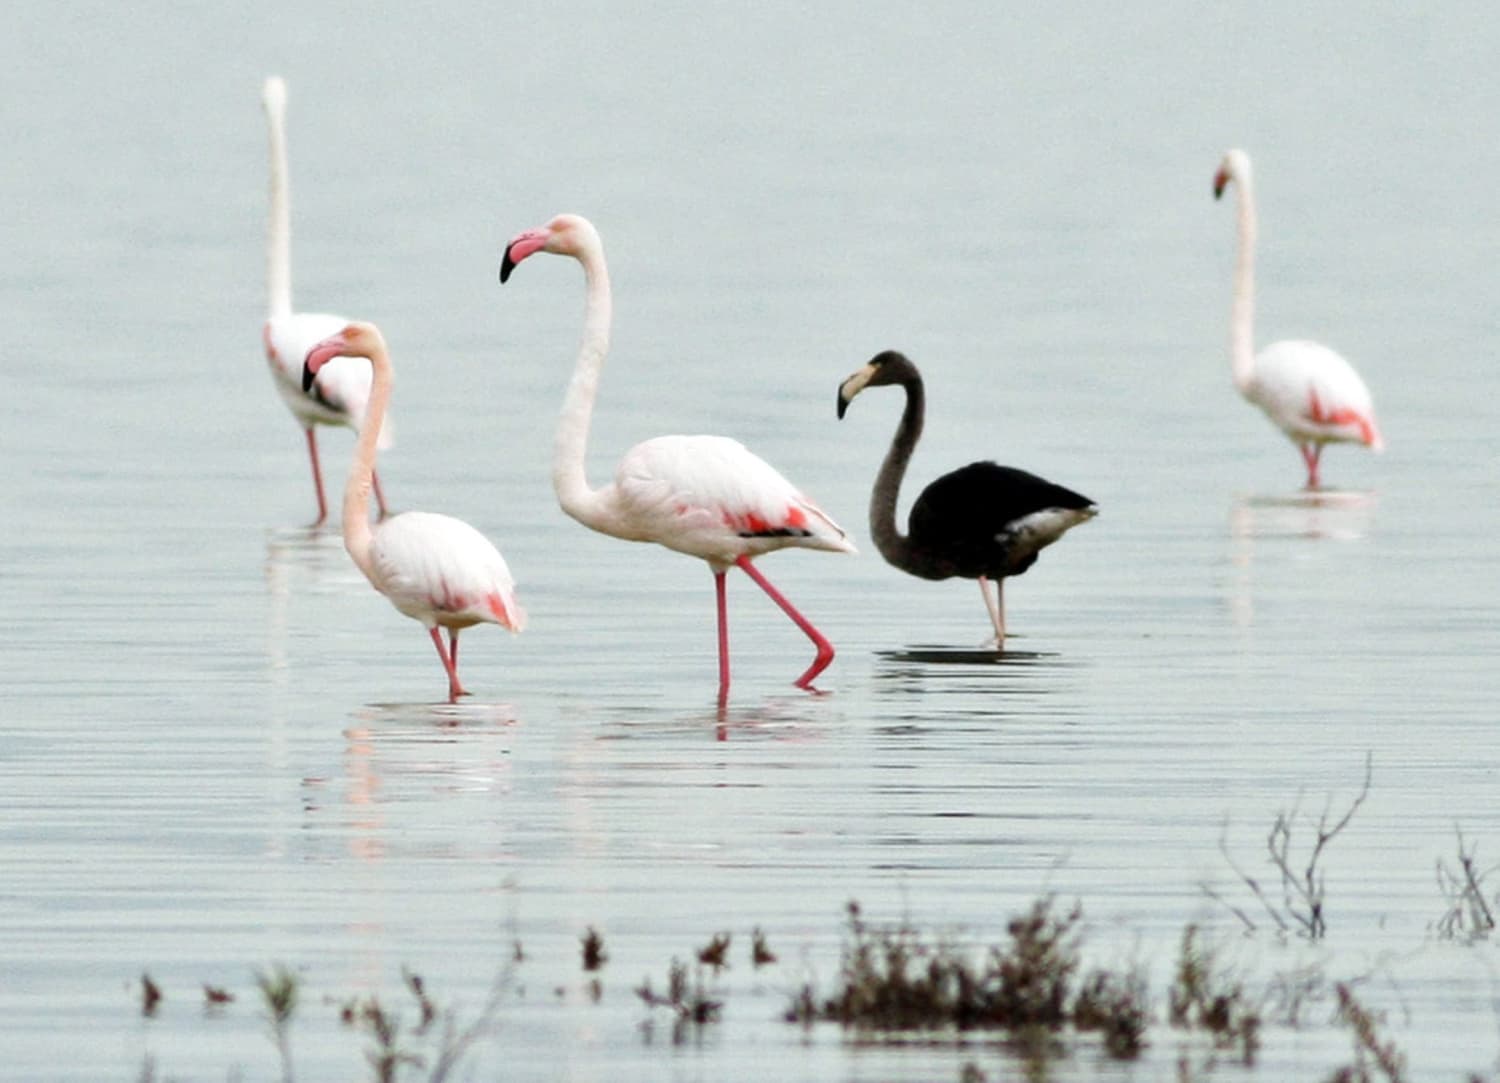 Rare Black Flamingo Ruffles Feathers in Cyprus - NBC News